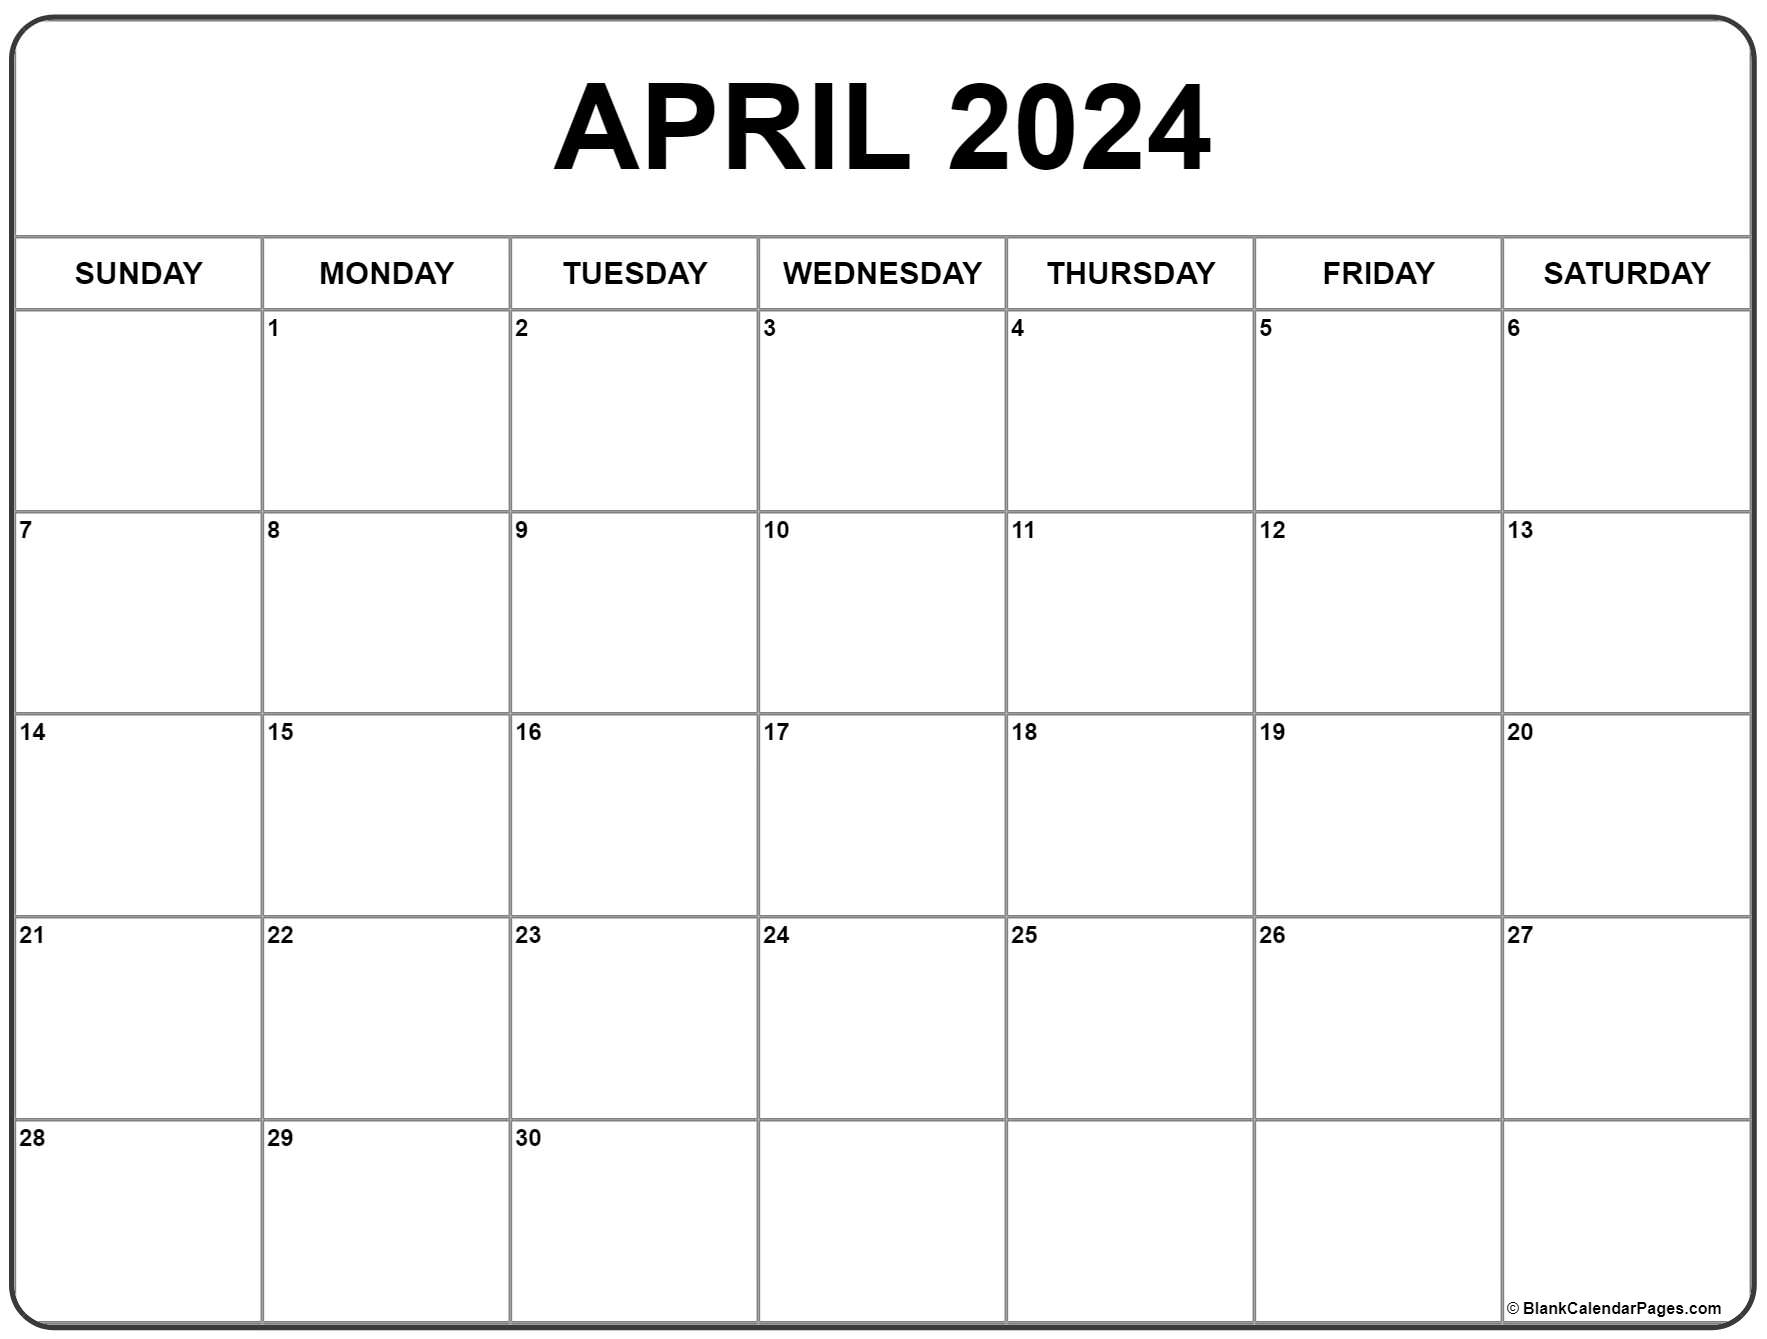 April 2024 Calendar | Free Printable Calendar with regard to Free Printable April 2024 Calendar